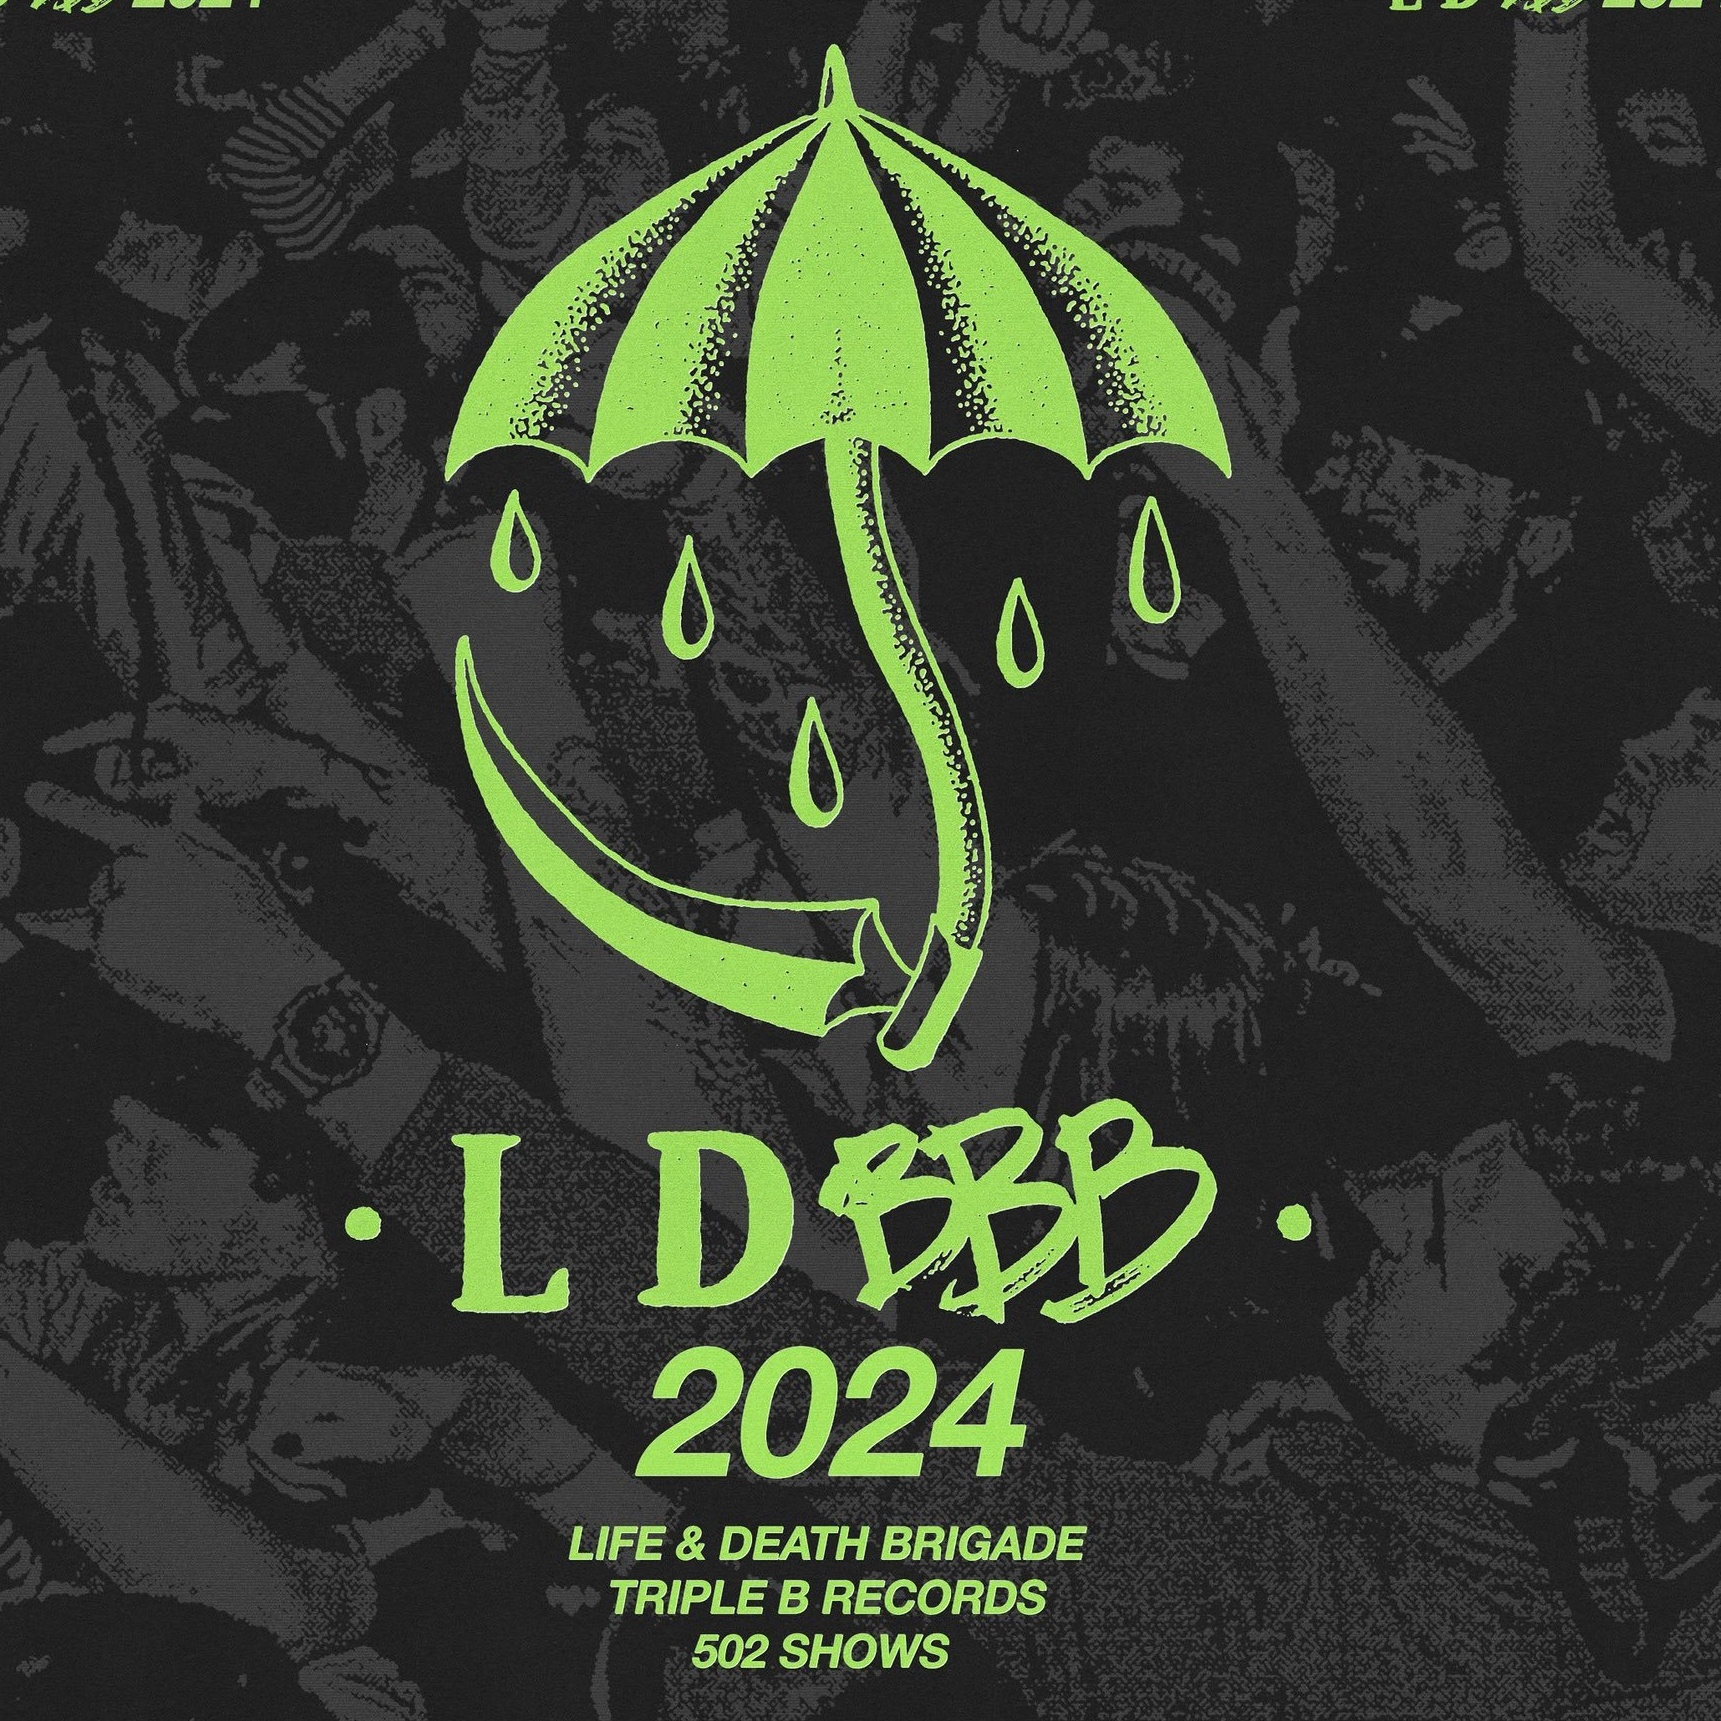 LDBBB 2024 announcement image